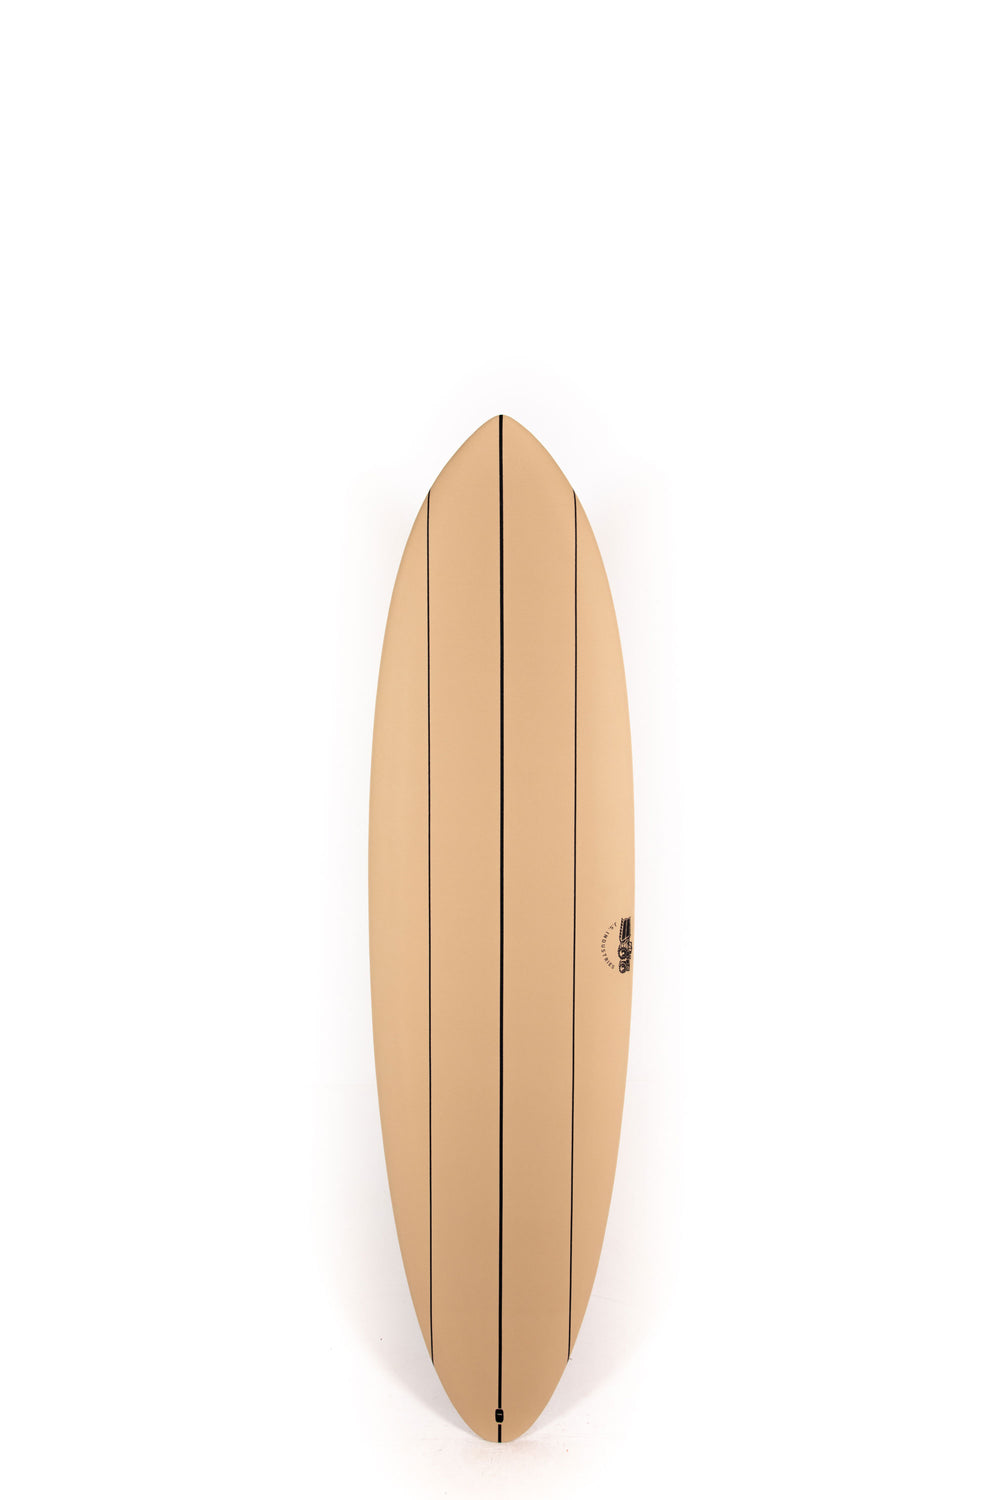 Pukas Surf Shop - JS Surfboards - BIG BARON SOFT - 6'8